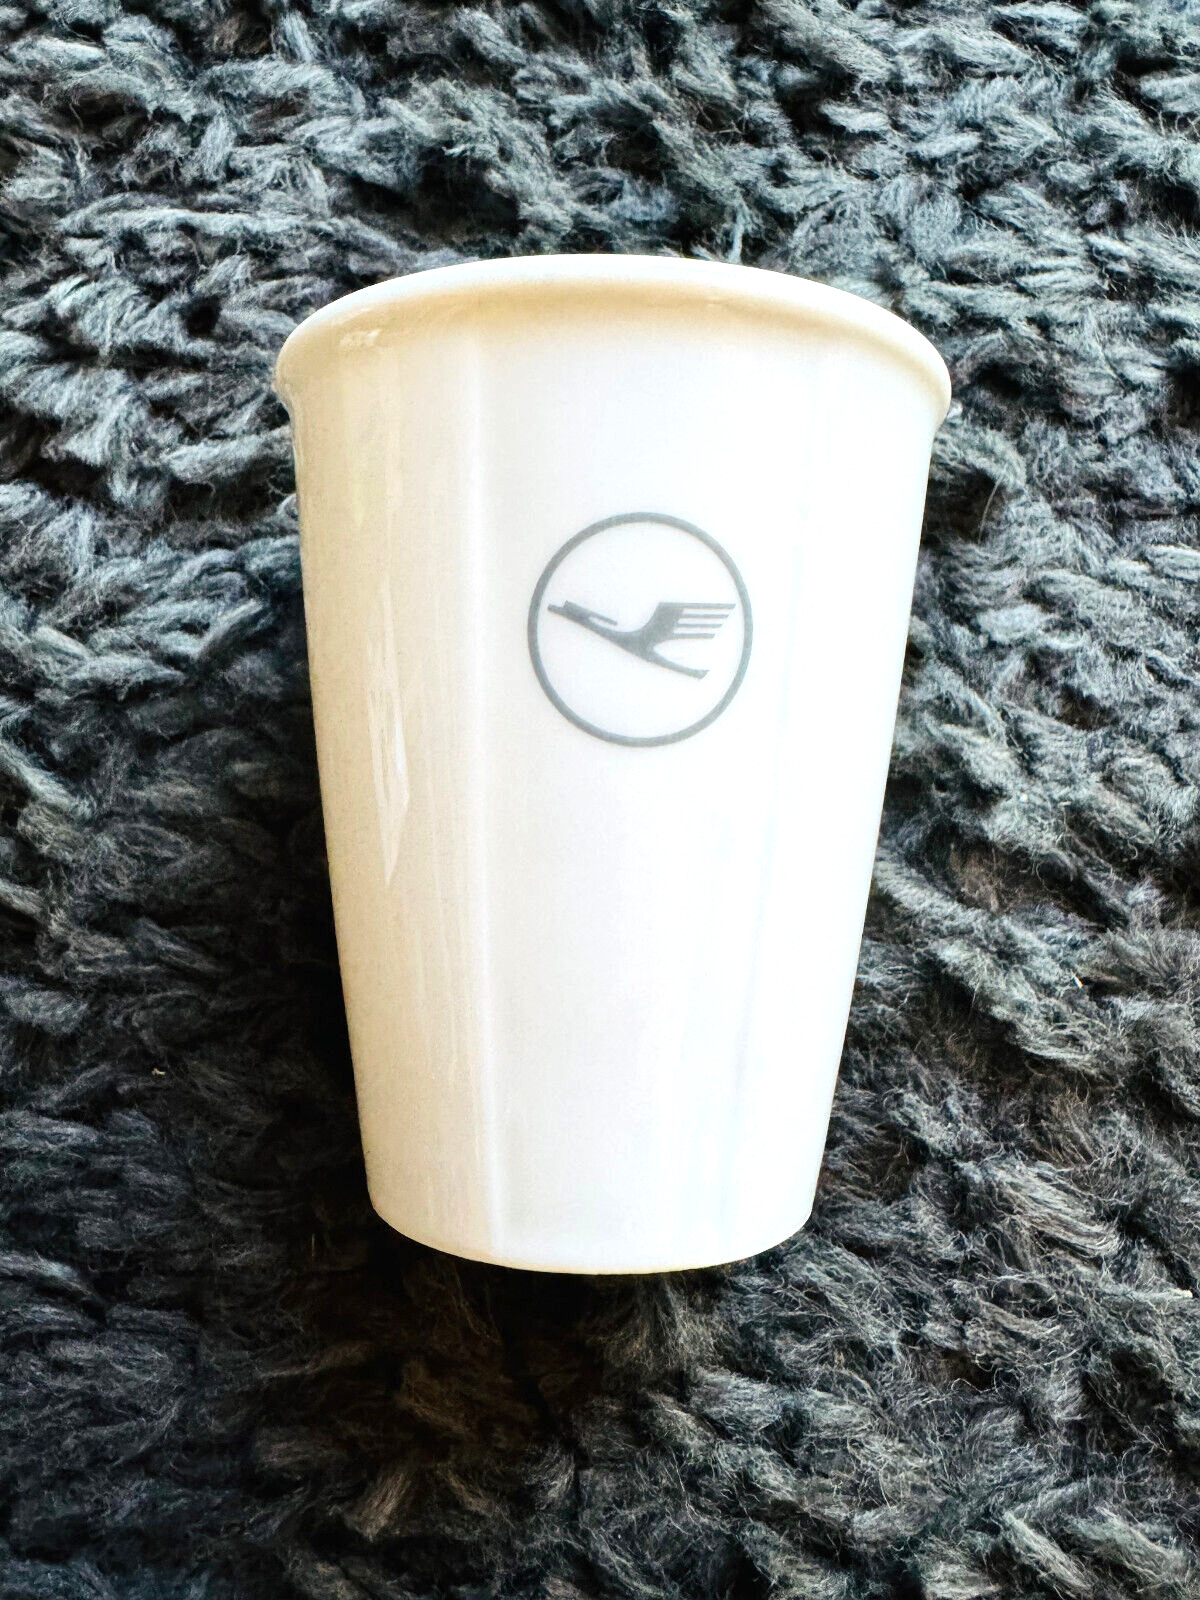 LUFTHANSA AIRLINE BUSINESS CLASS COFFEE MUG CUP Germany